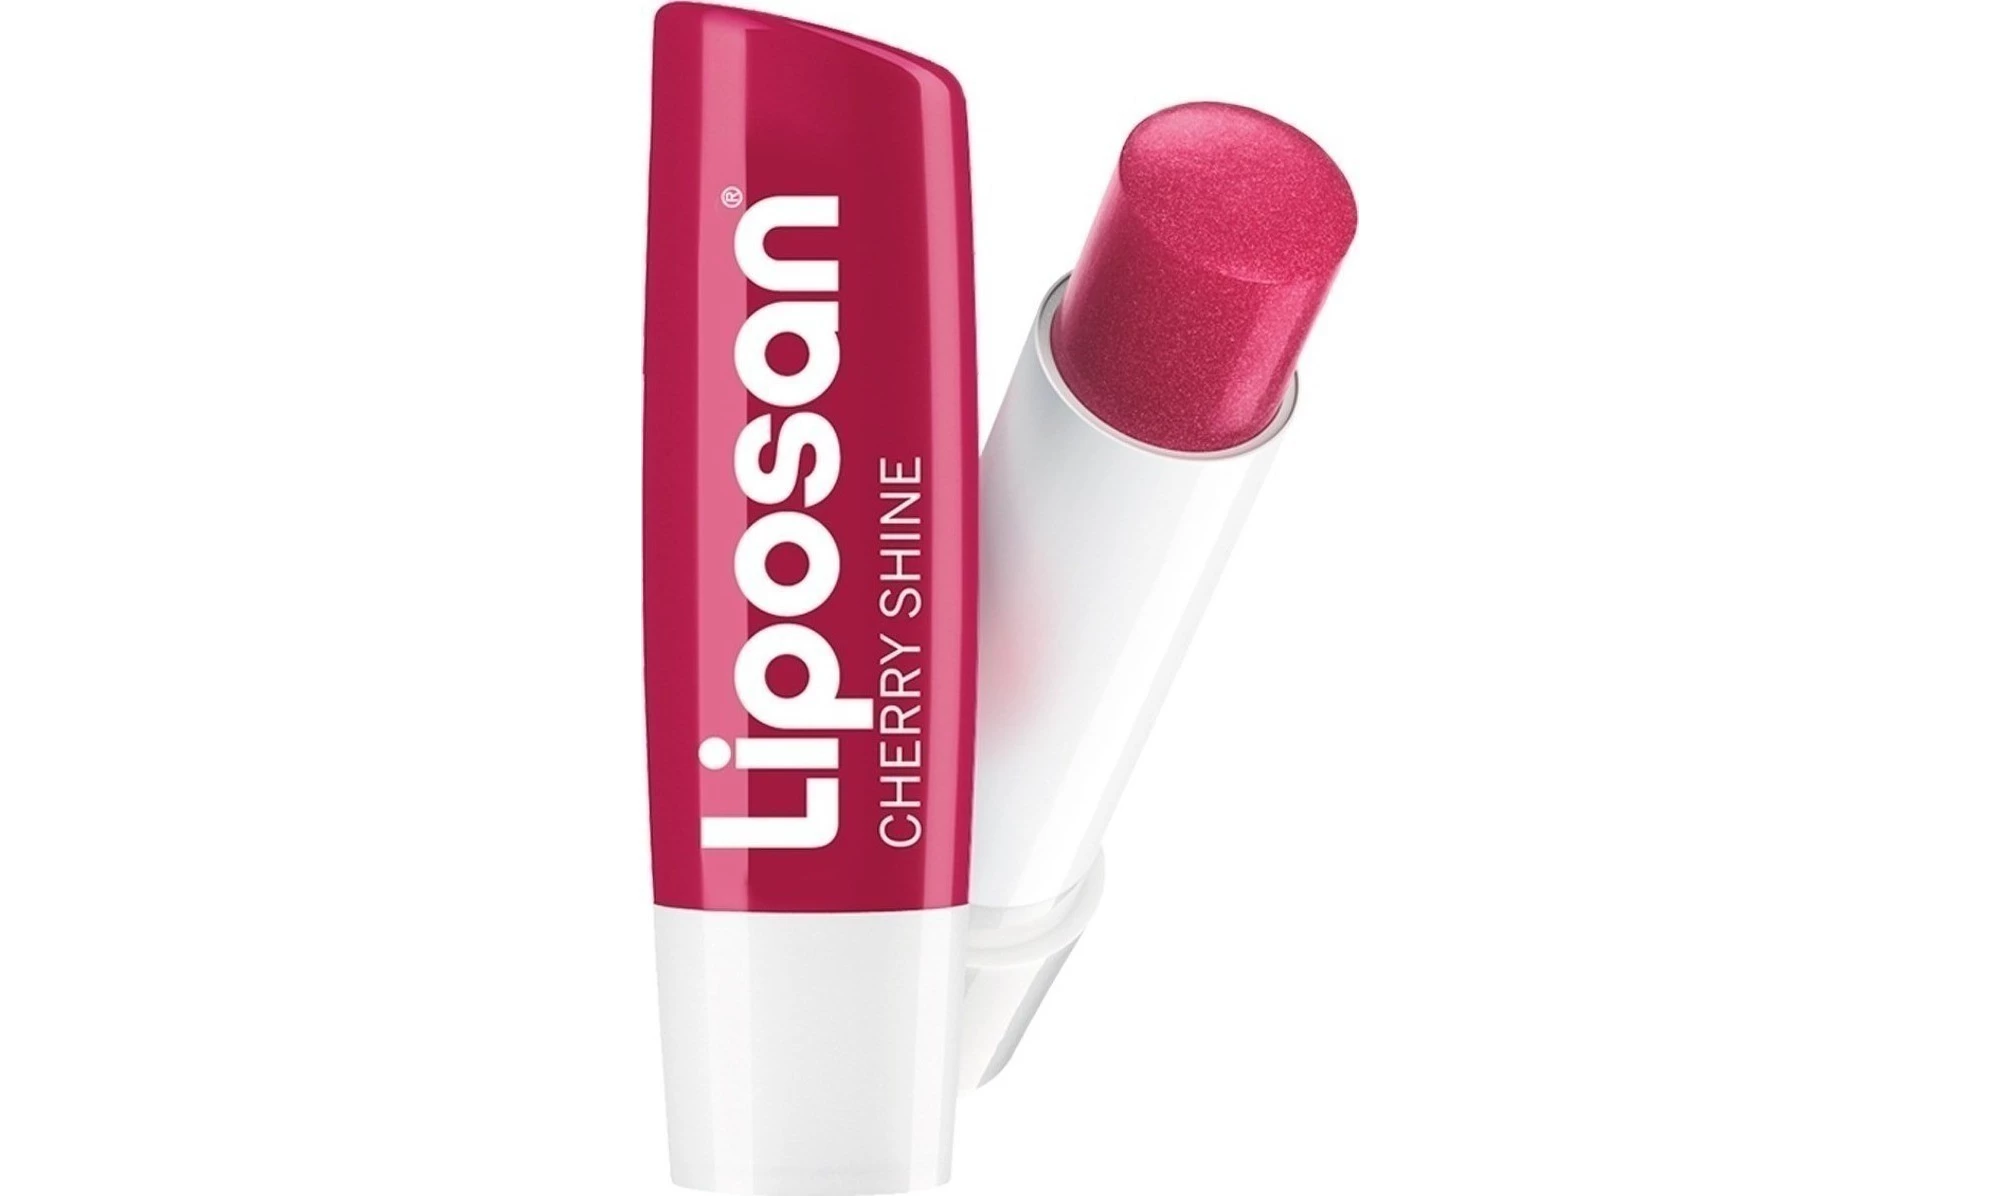 Liposan Cherry Shine Περιποιητικό Lip Balm με Άρωμα Κεράσι 4,8gr